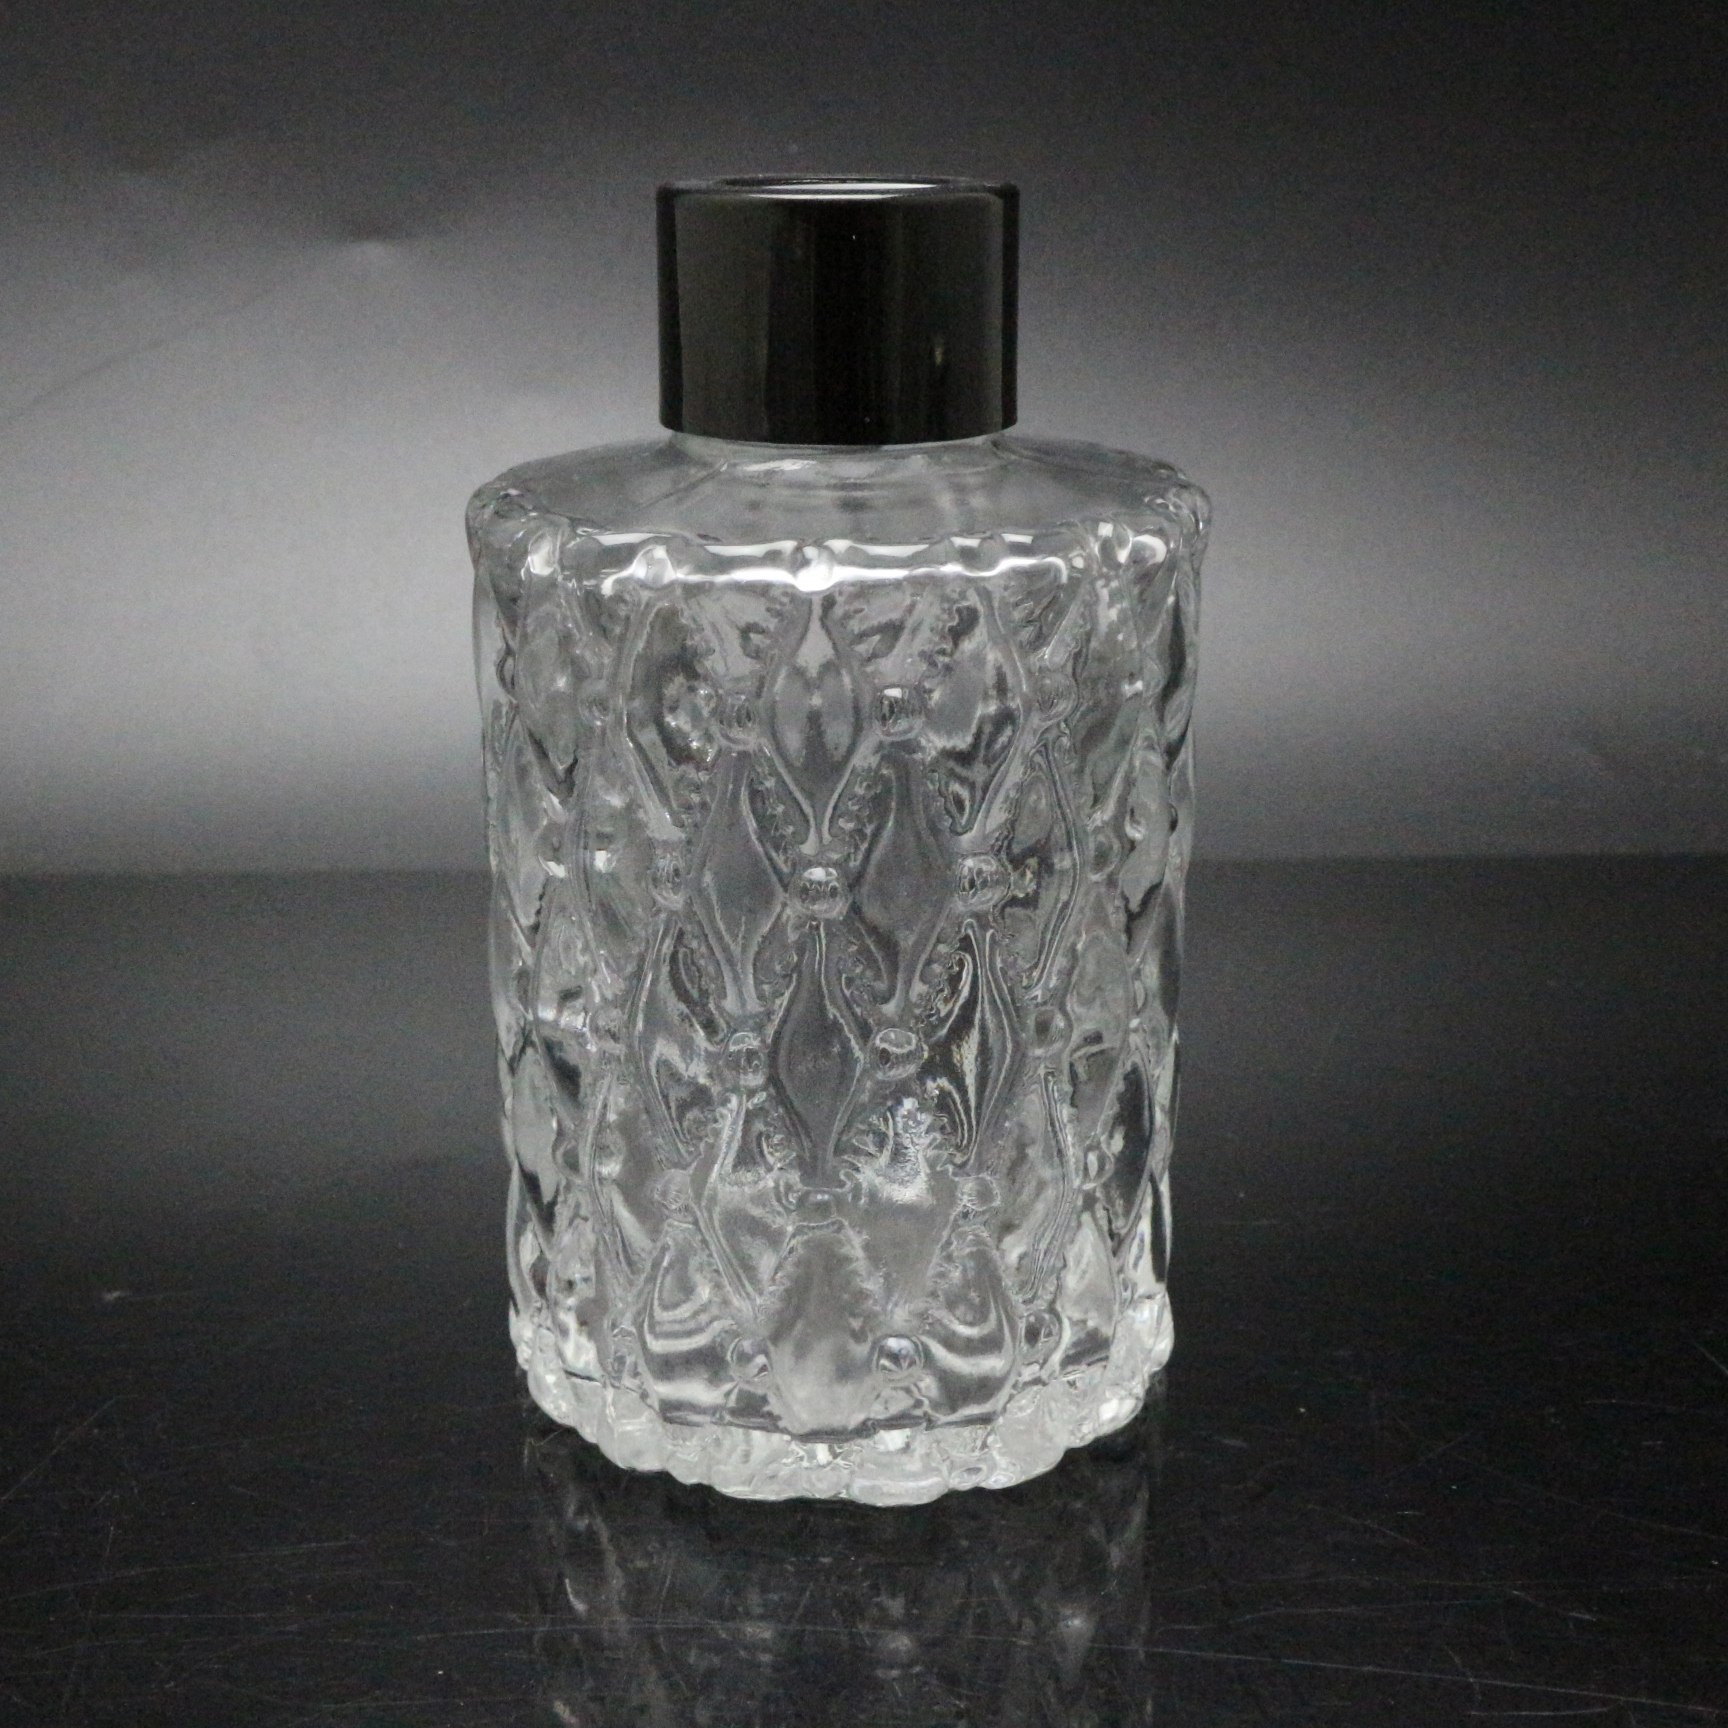 Ougual גליל זכוכית מפזרת בקבוקי אבזרי ריח 120ml שמנים אתריים